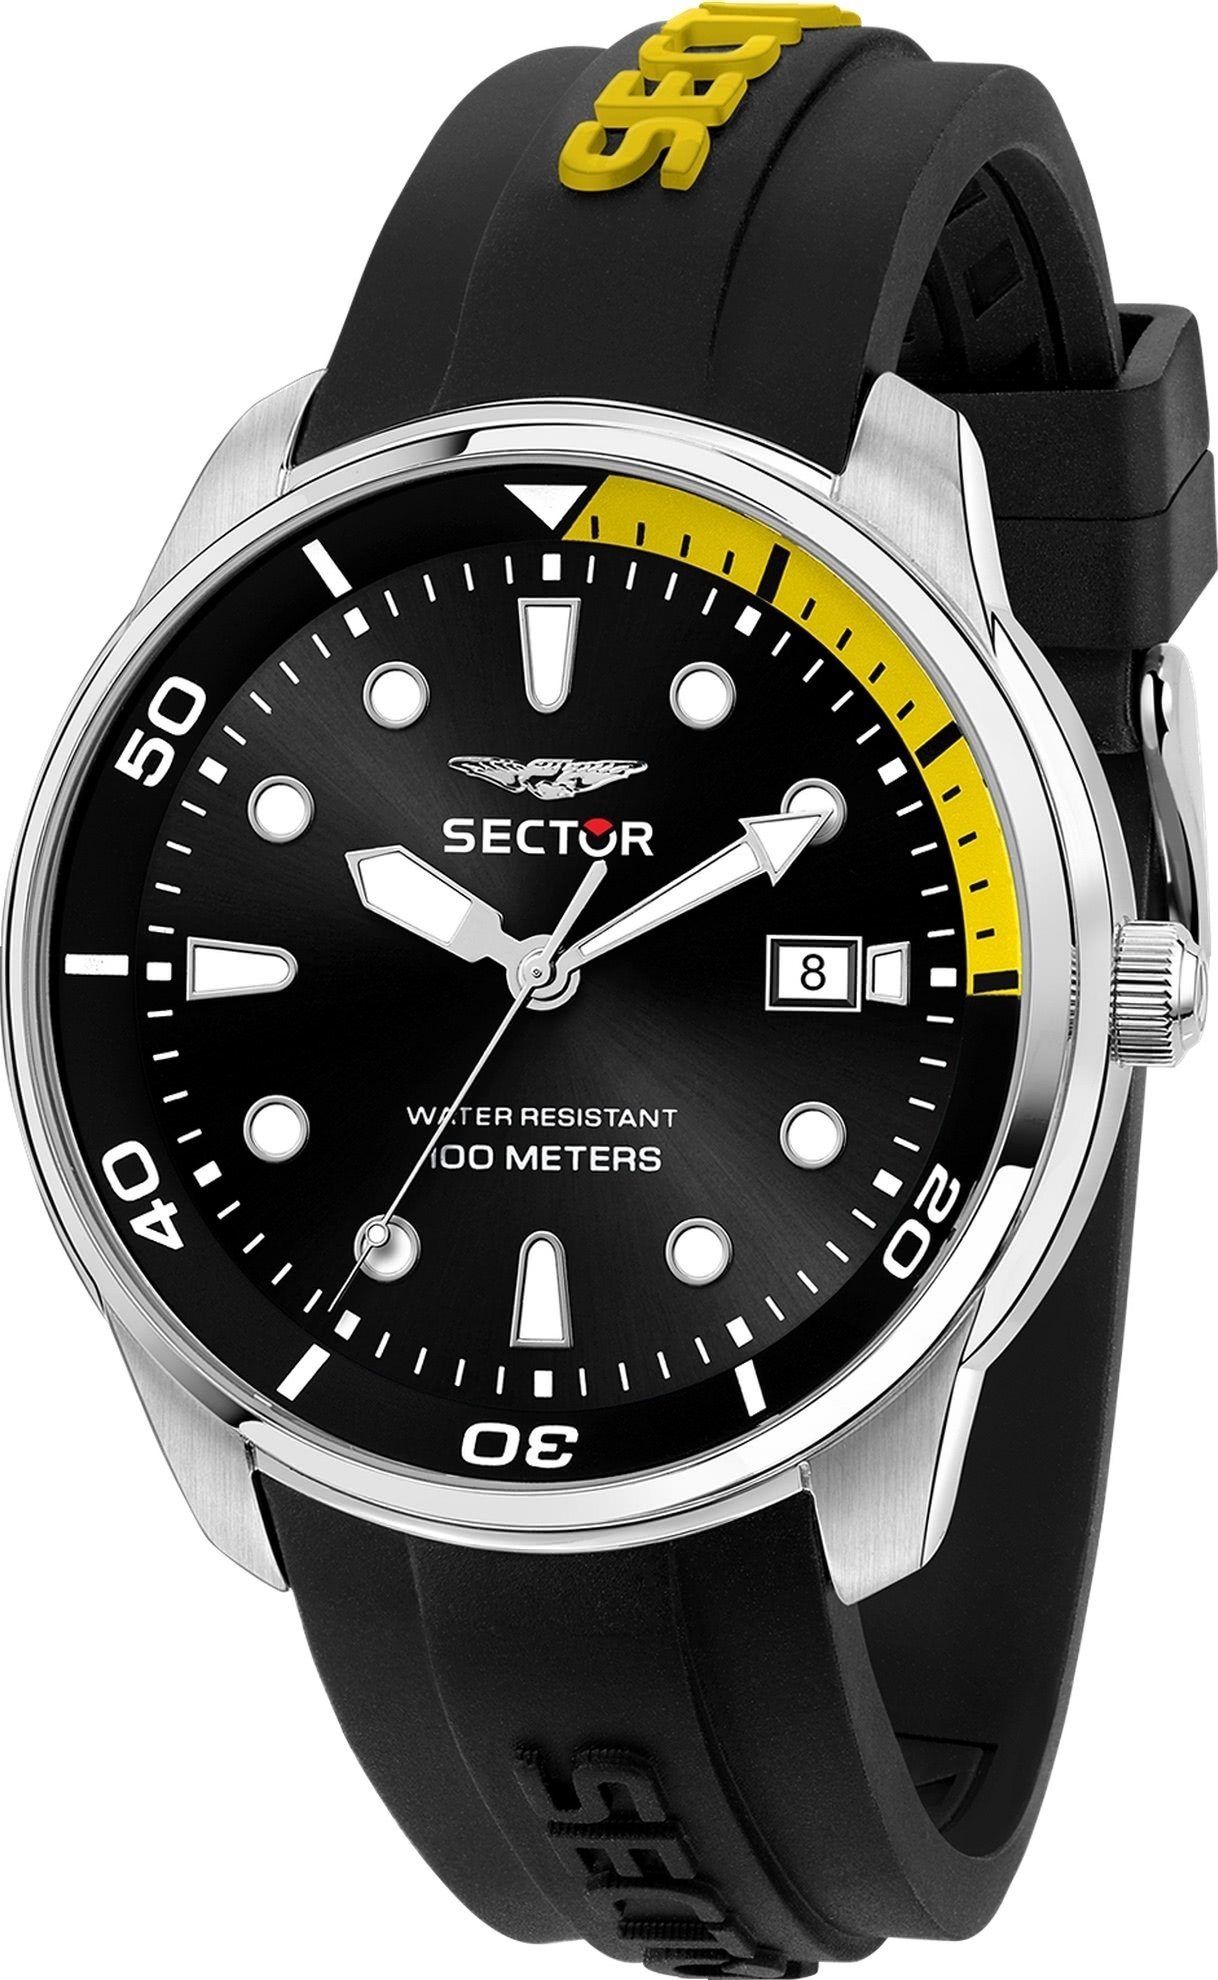 Sector Sector Casual Armbanduhr Silikonarmband Armbanduhr schwarz, Herren rund, (41mm), Herren Quarzuhr groß Analog,